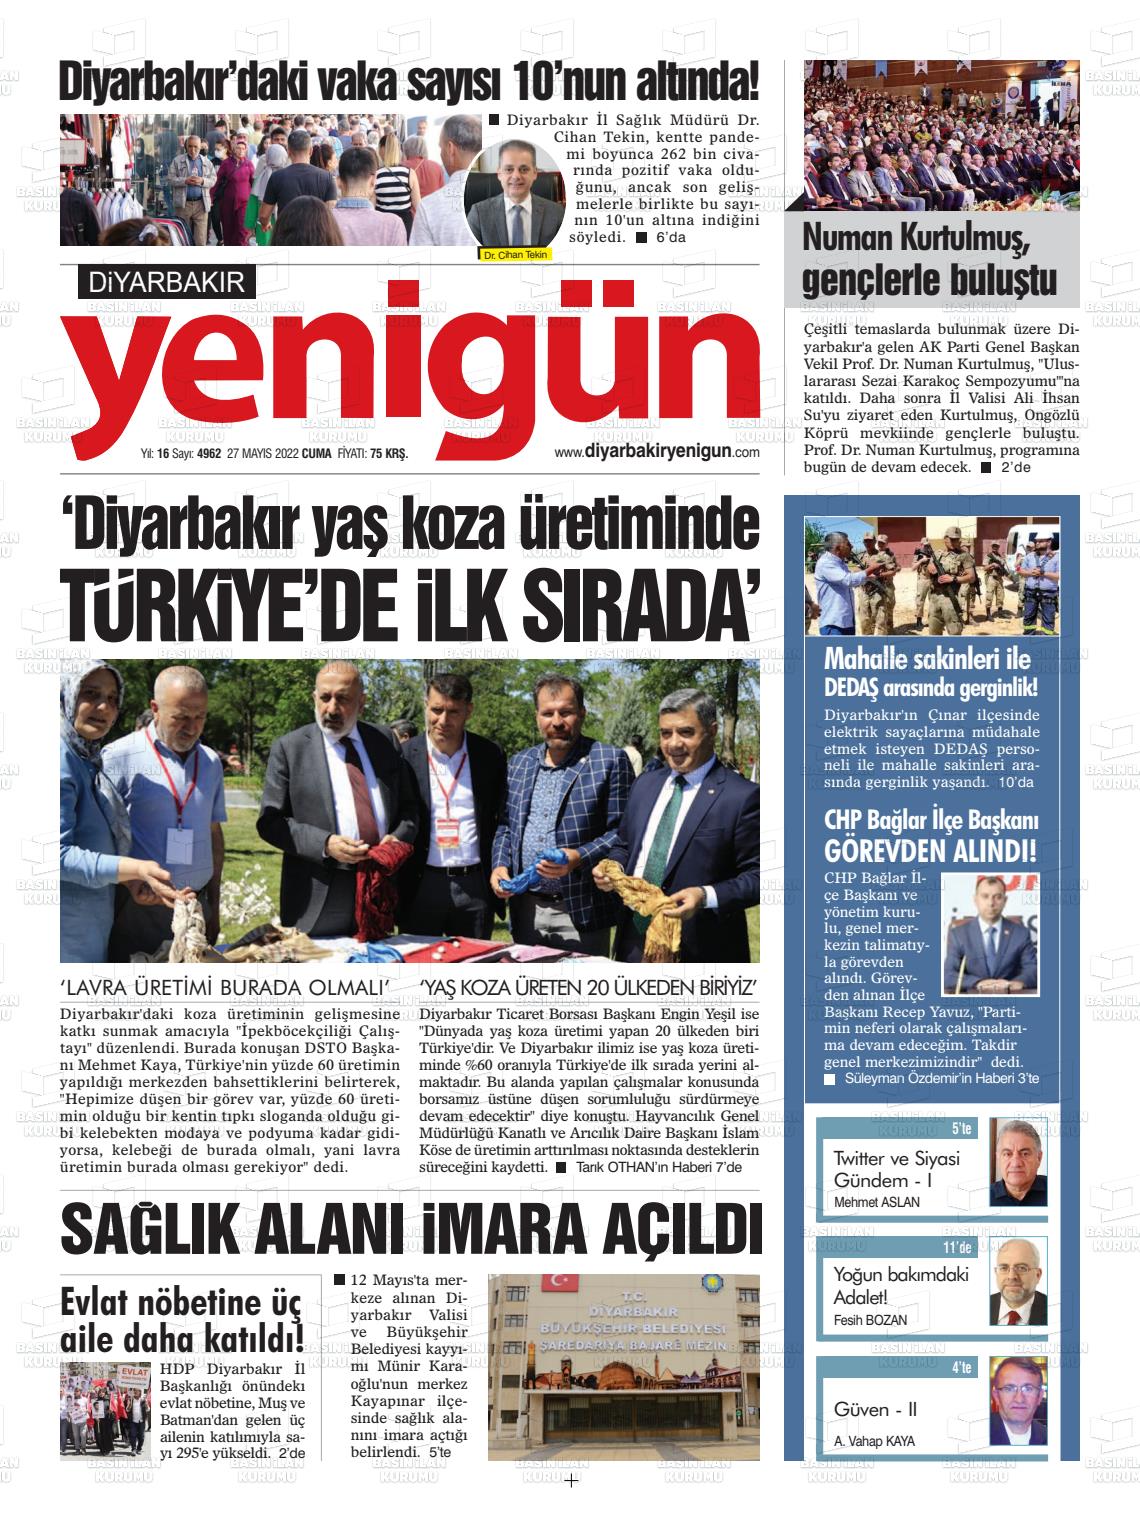 27 Mayıs 2022 Diyarbakır Yenigün Gazete Manşeti